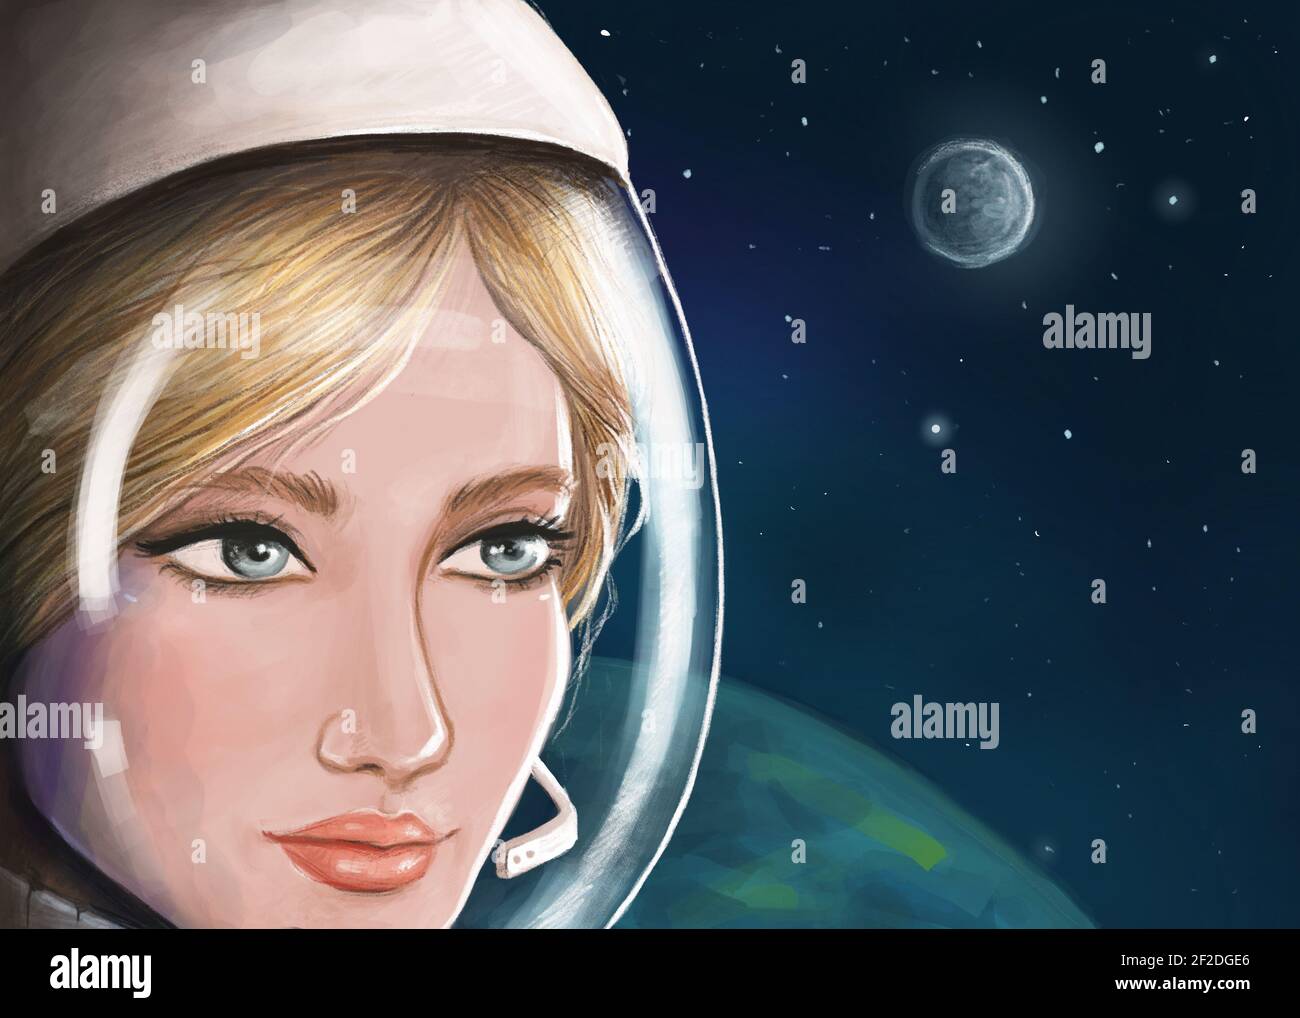 hand-drawn digital illustration of a female astronaut Stock Photo